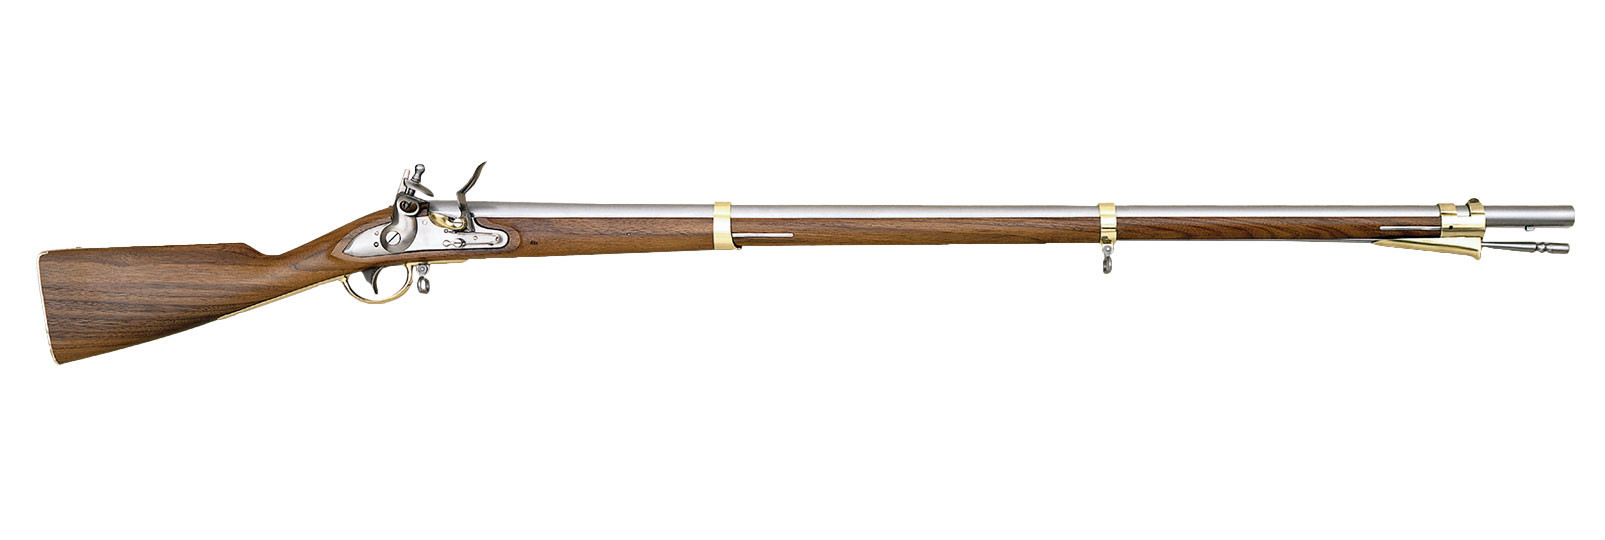 1798 Austrian infantry Rifle